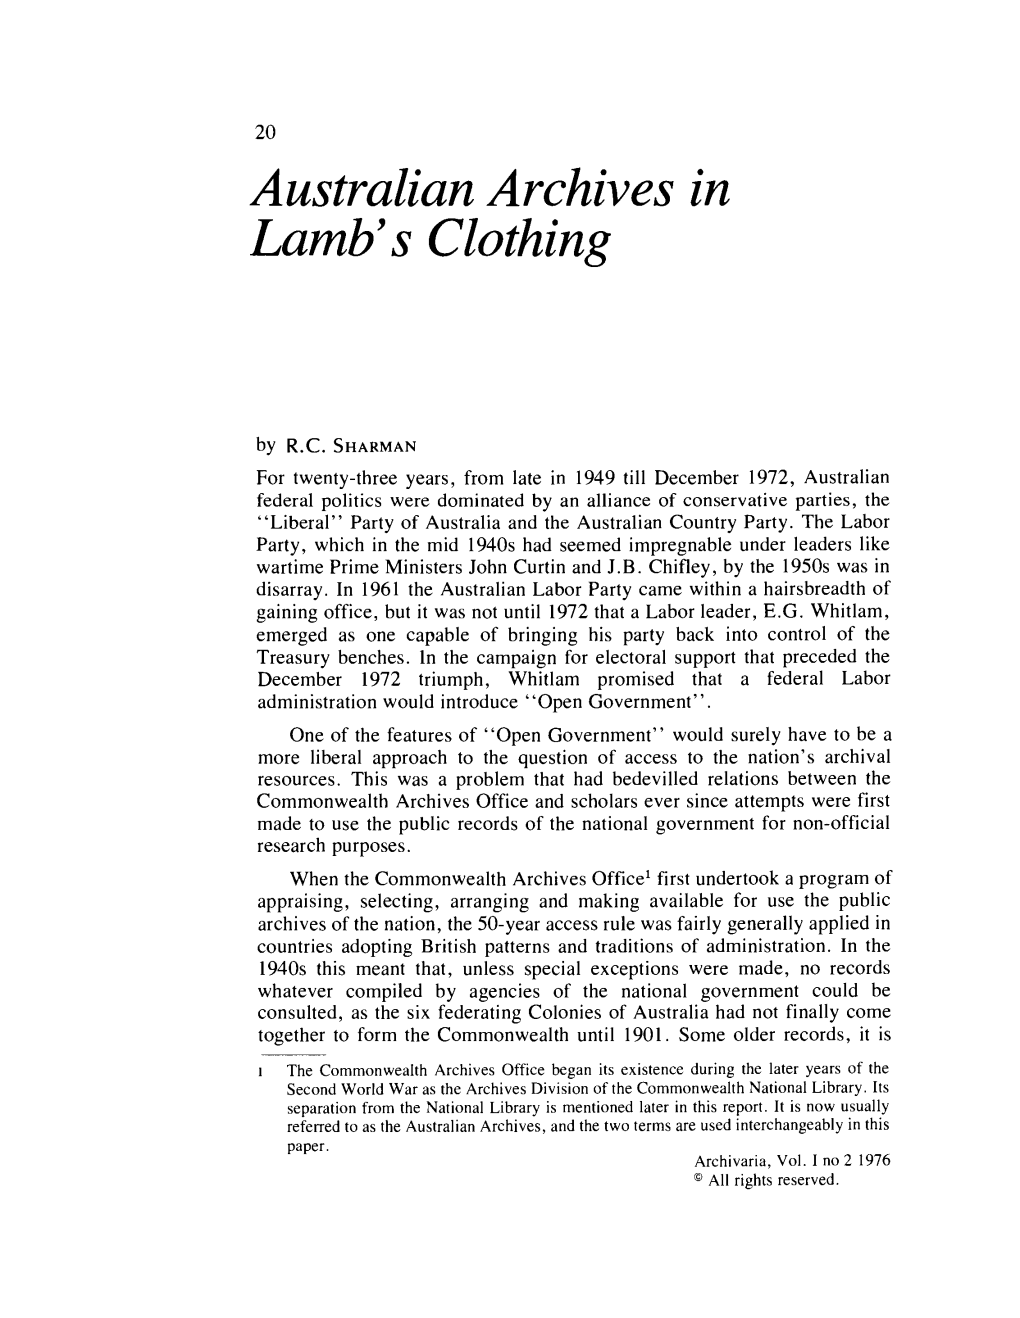 Australian Archives in Lamb's Clothing